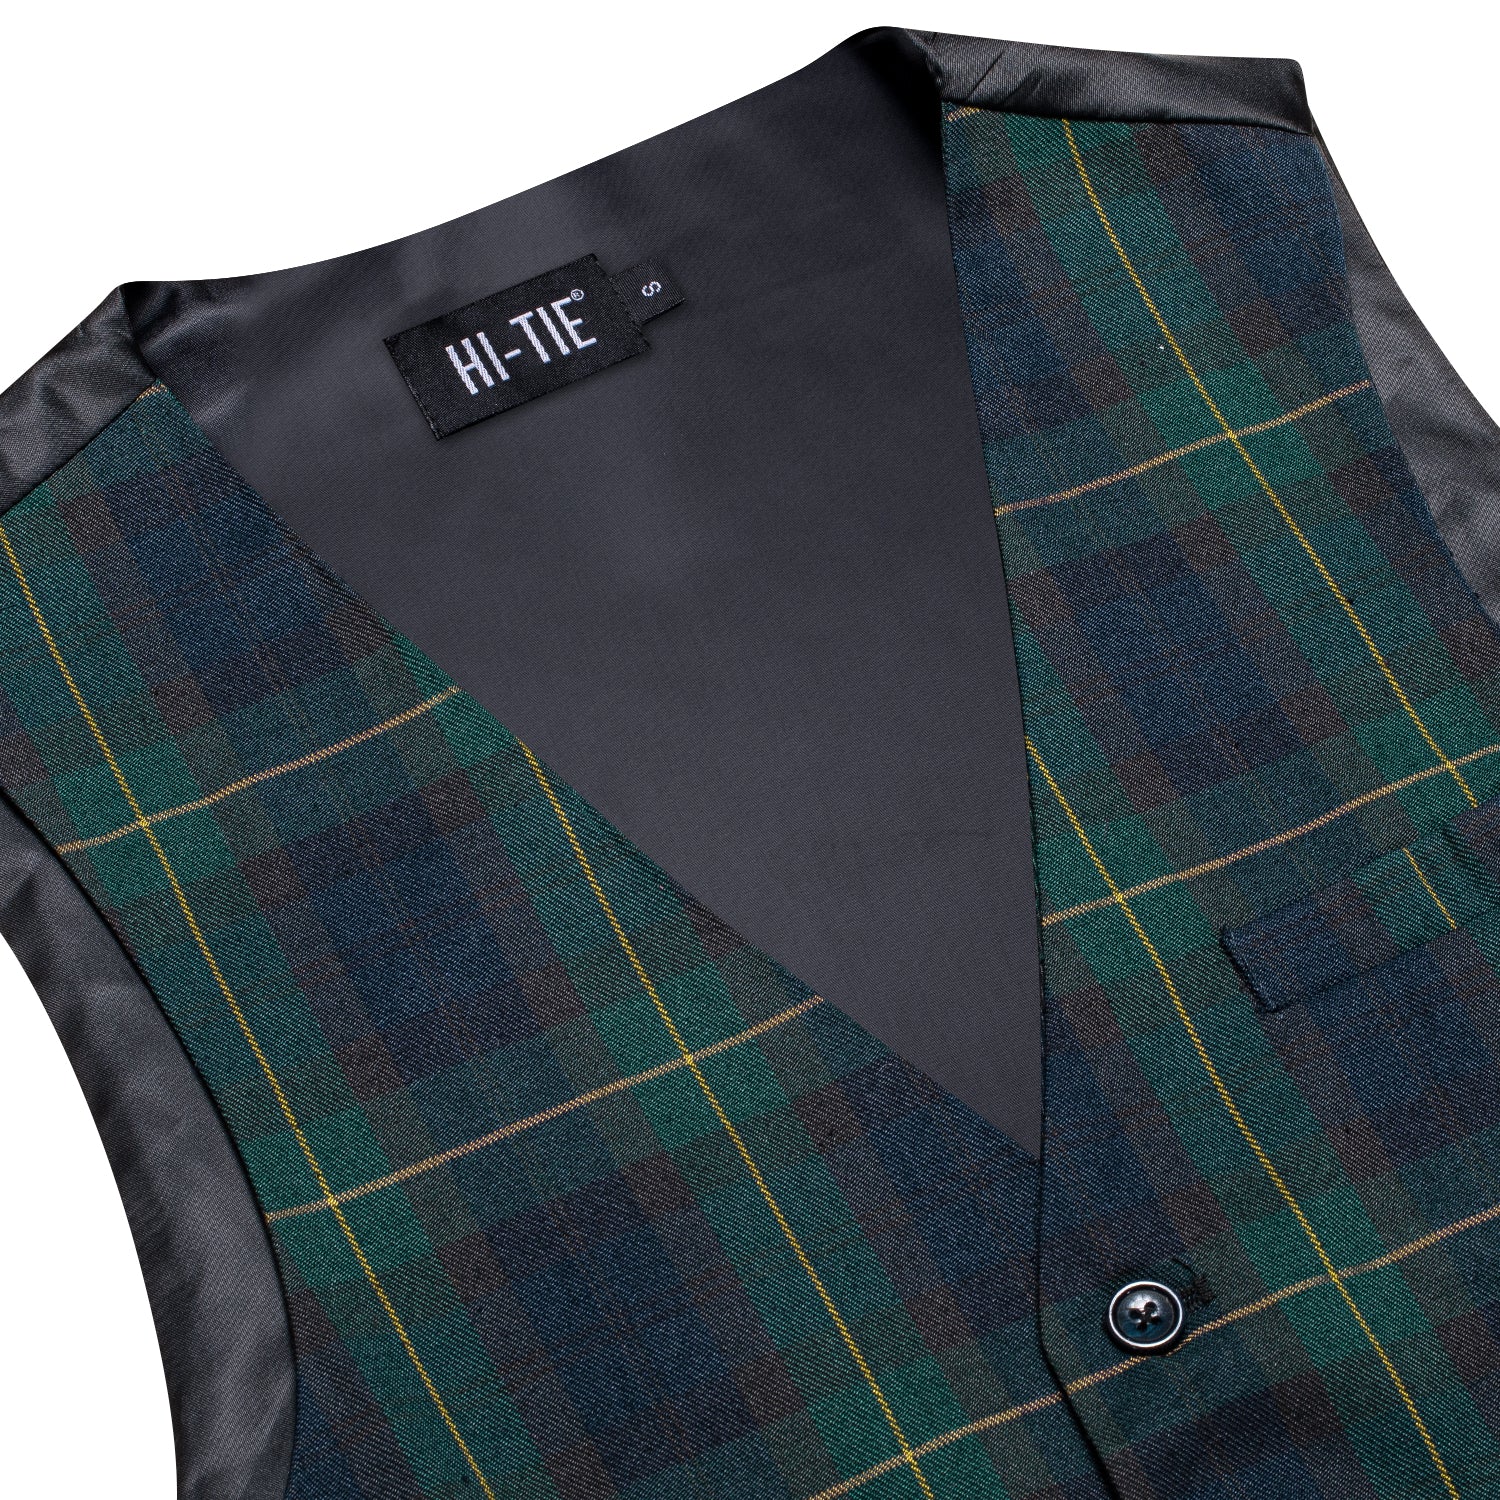 New Green Blue Yellow Plaid Silk England Style Men's Single Vest Waistcoat